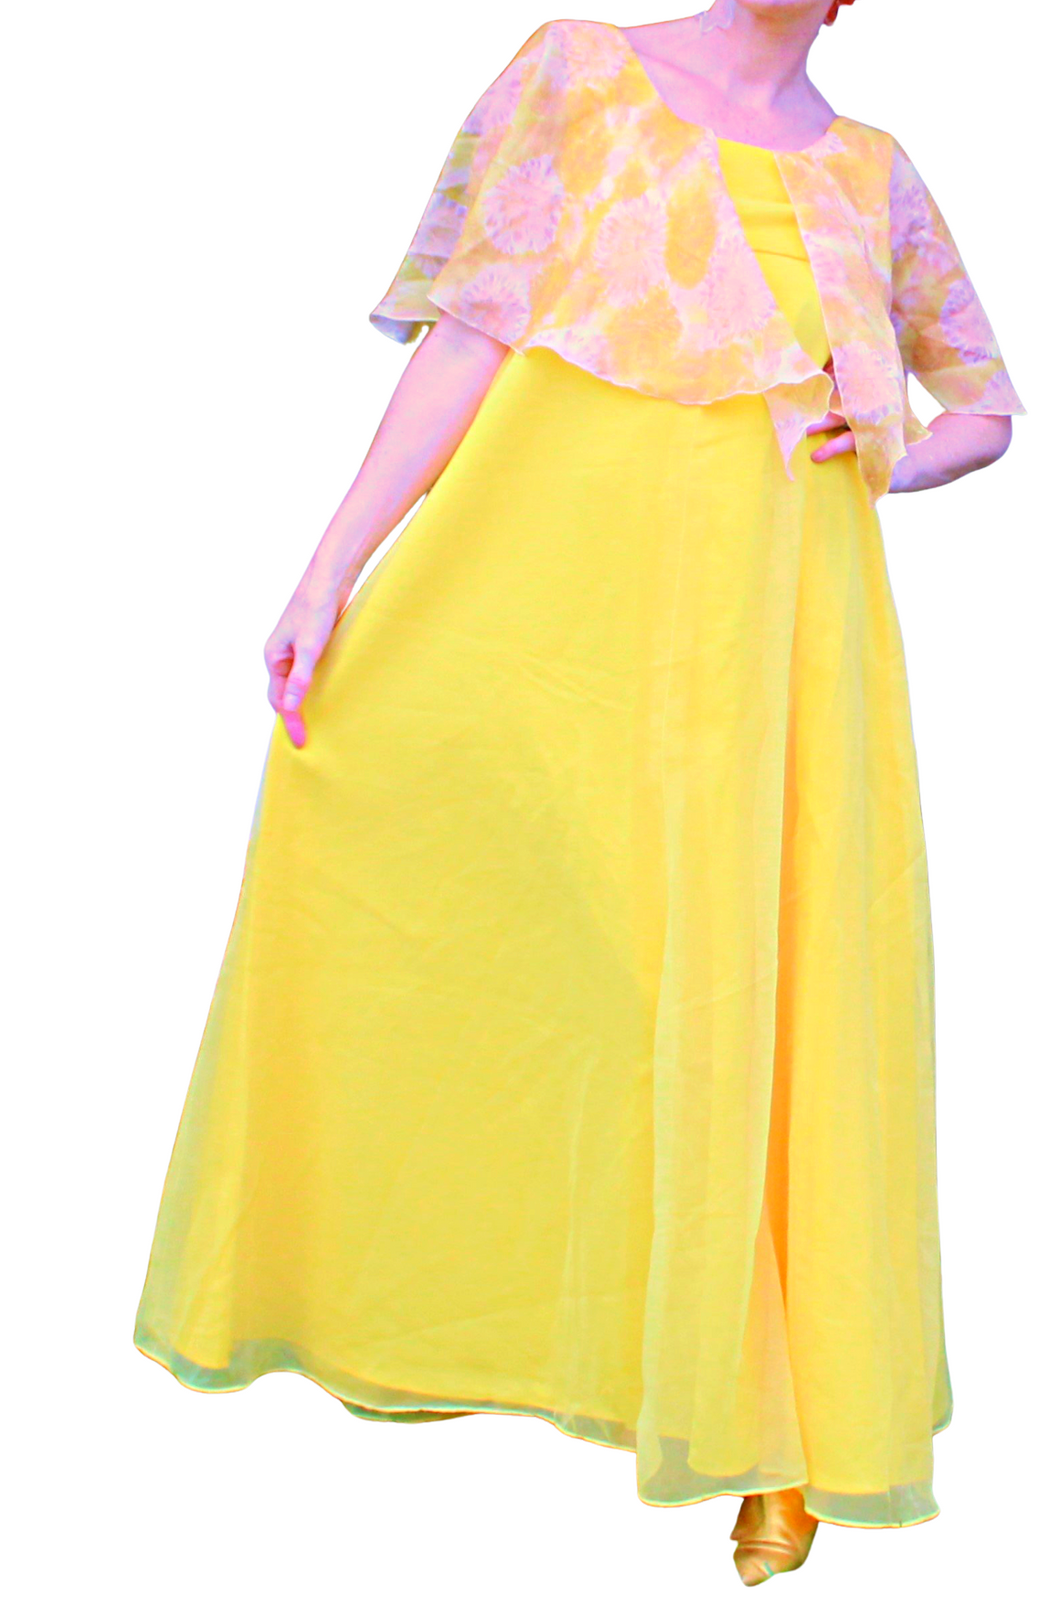 70's formal/bridesmaid dress, yellow.